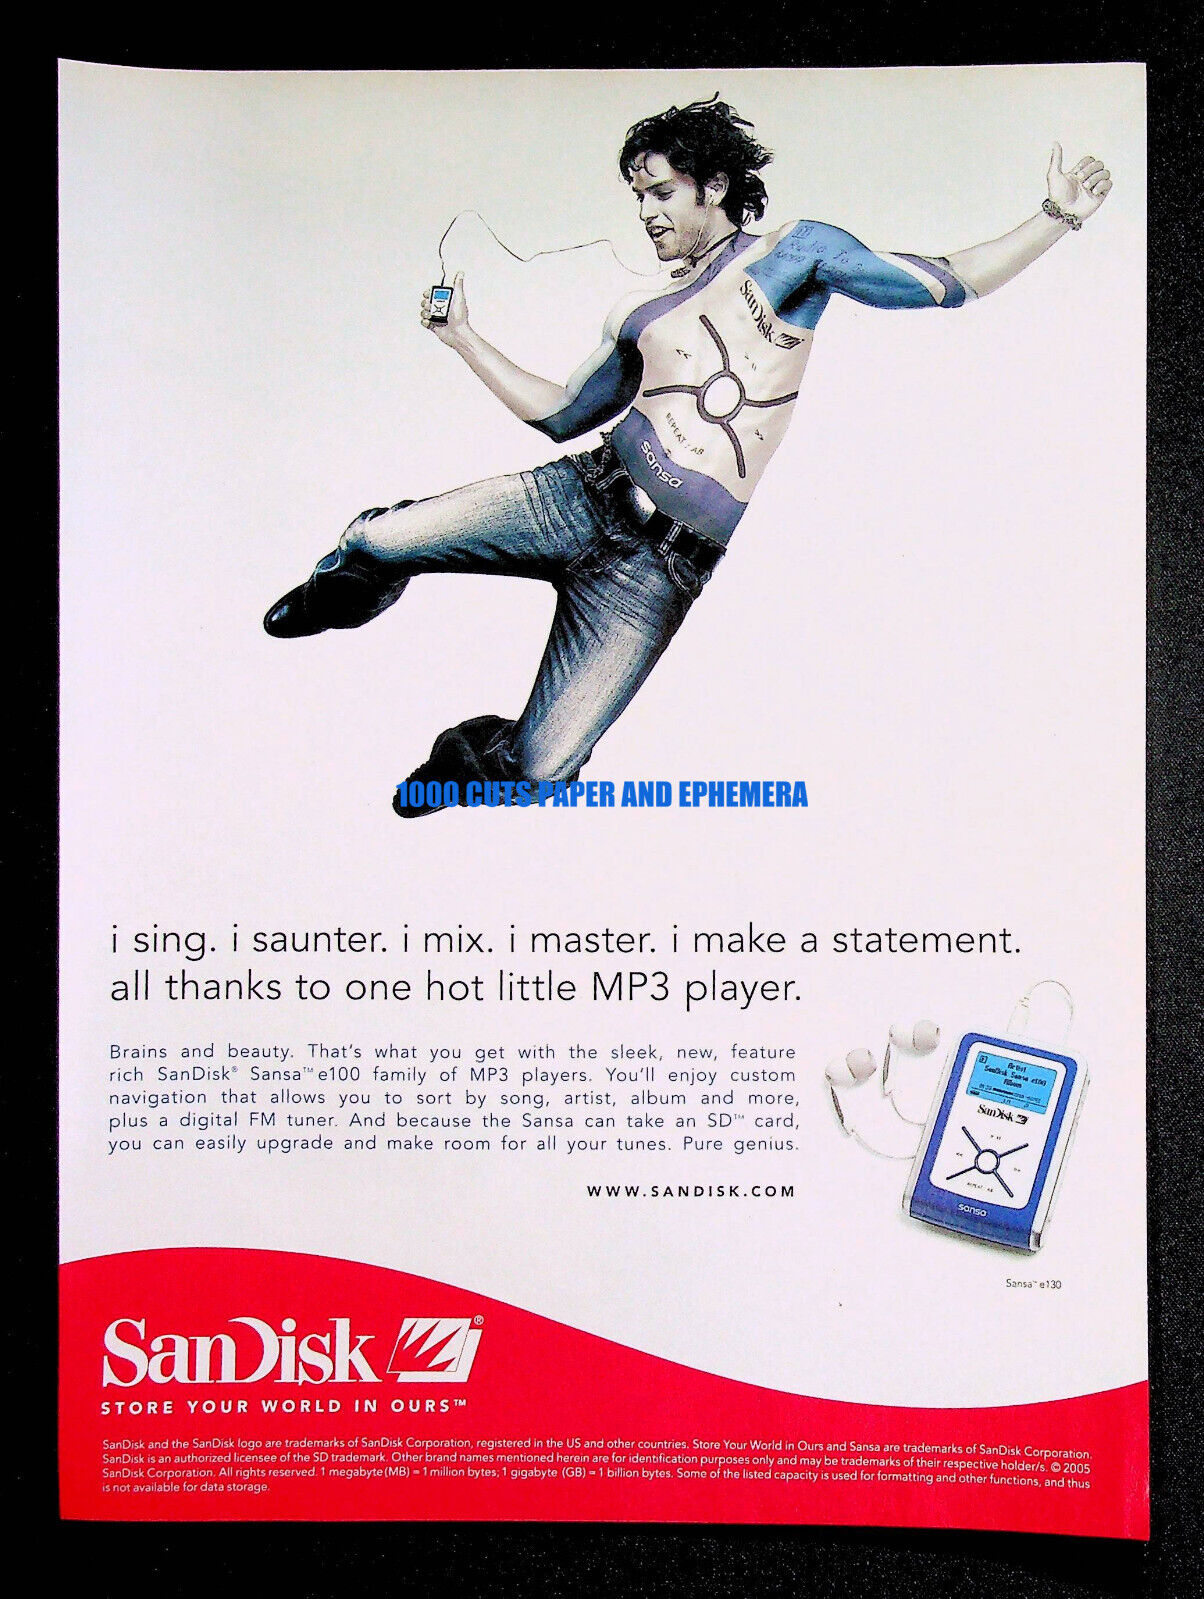 Sandisk Sansa e100 MP3 Player 2005 Trade Print Magazine Ad Poster ADVERT